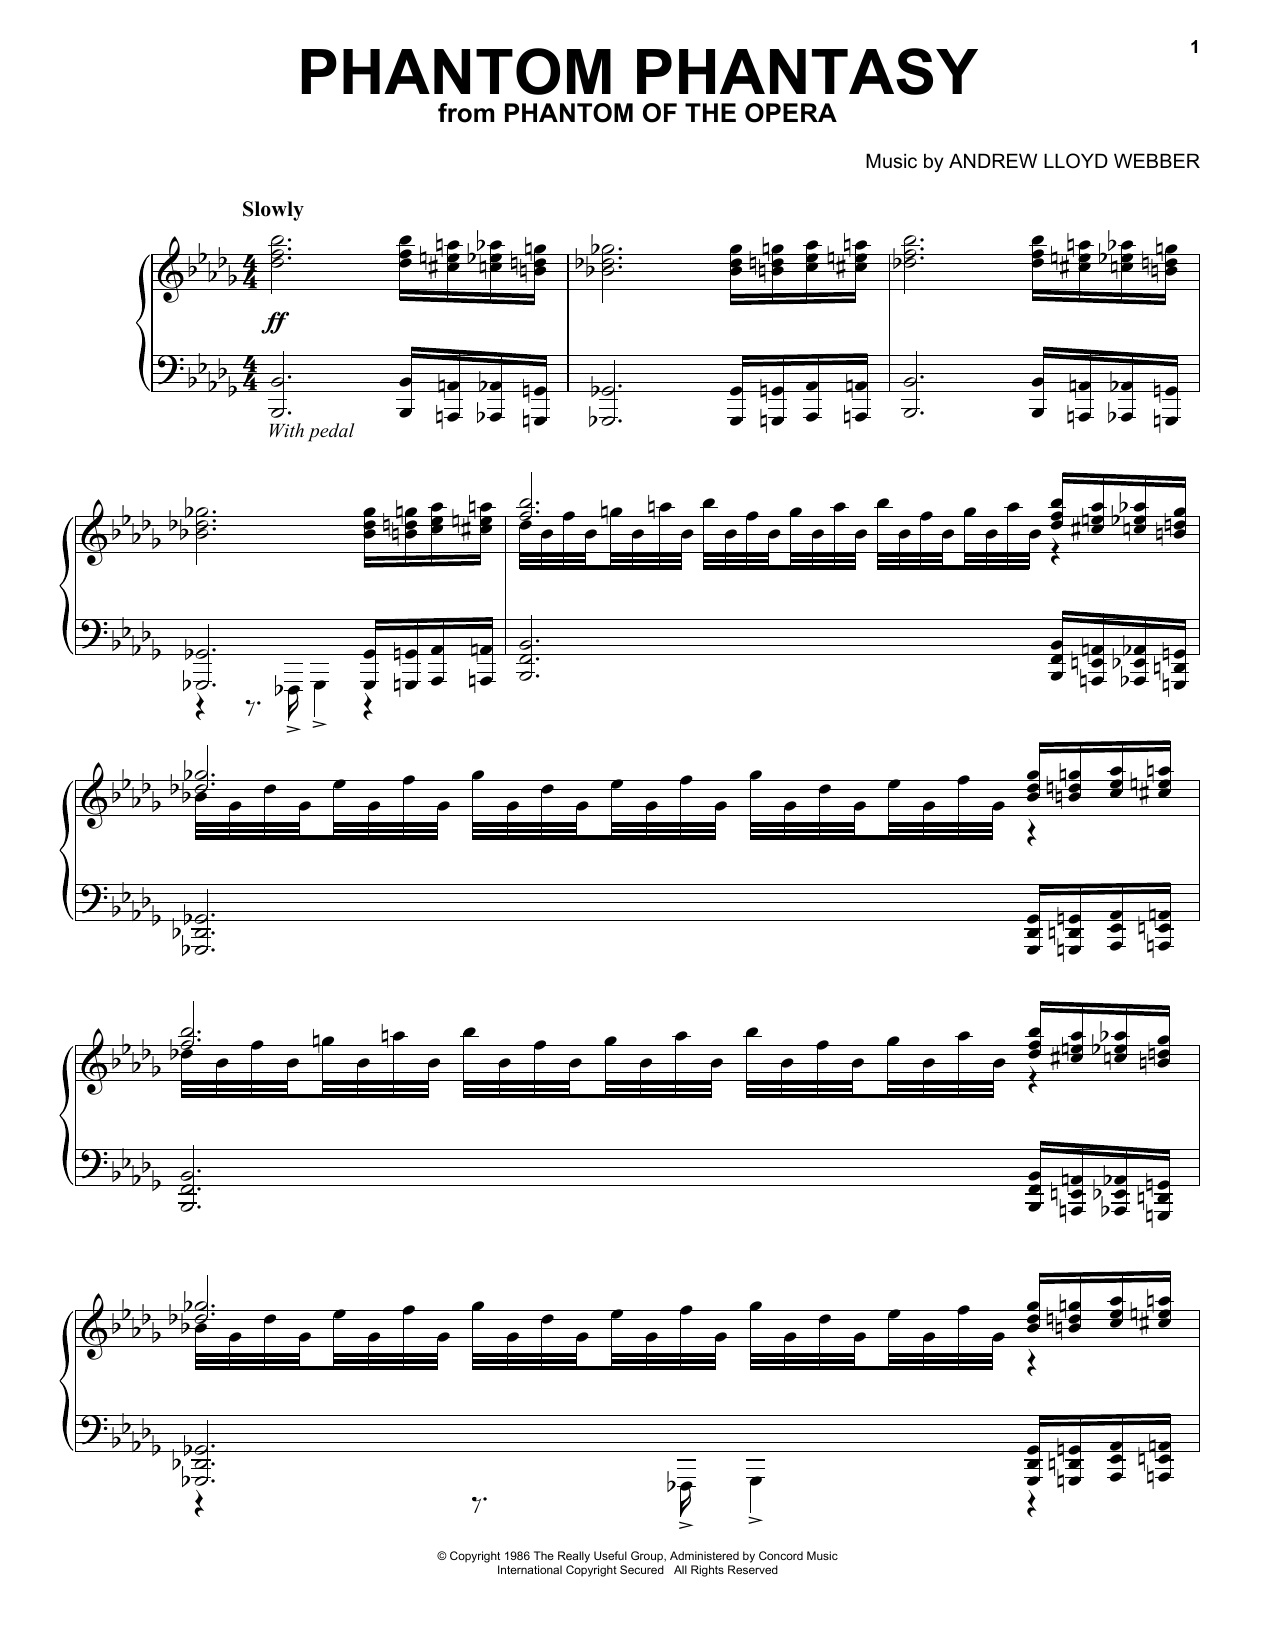 Andrew Lloyd Webber Phantom Phantasy Sheet Music Notes & Chords for Piano Solo - Download or Print PDF